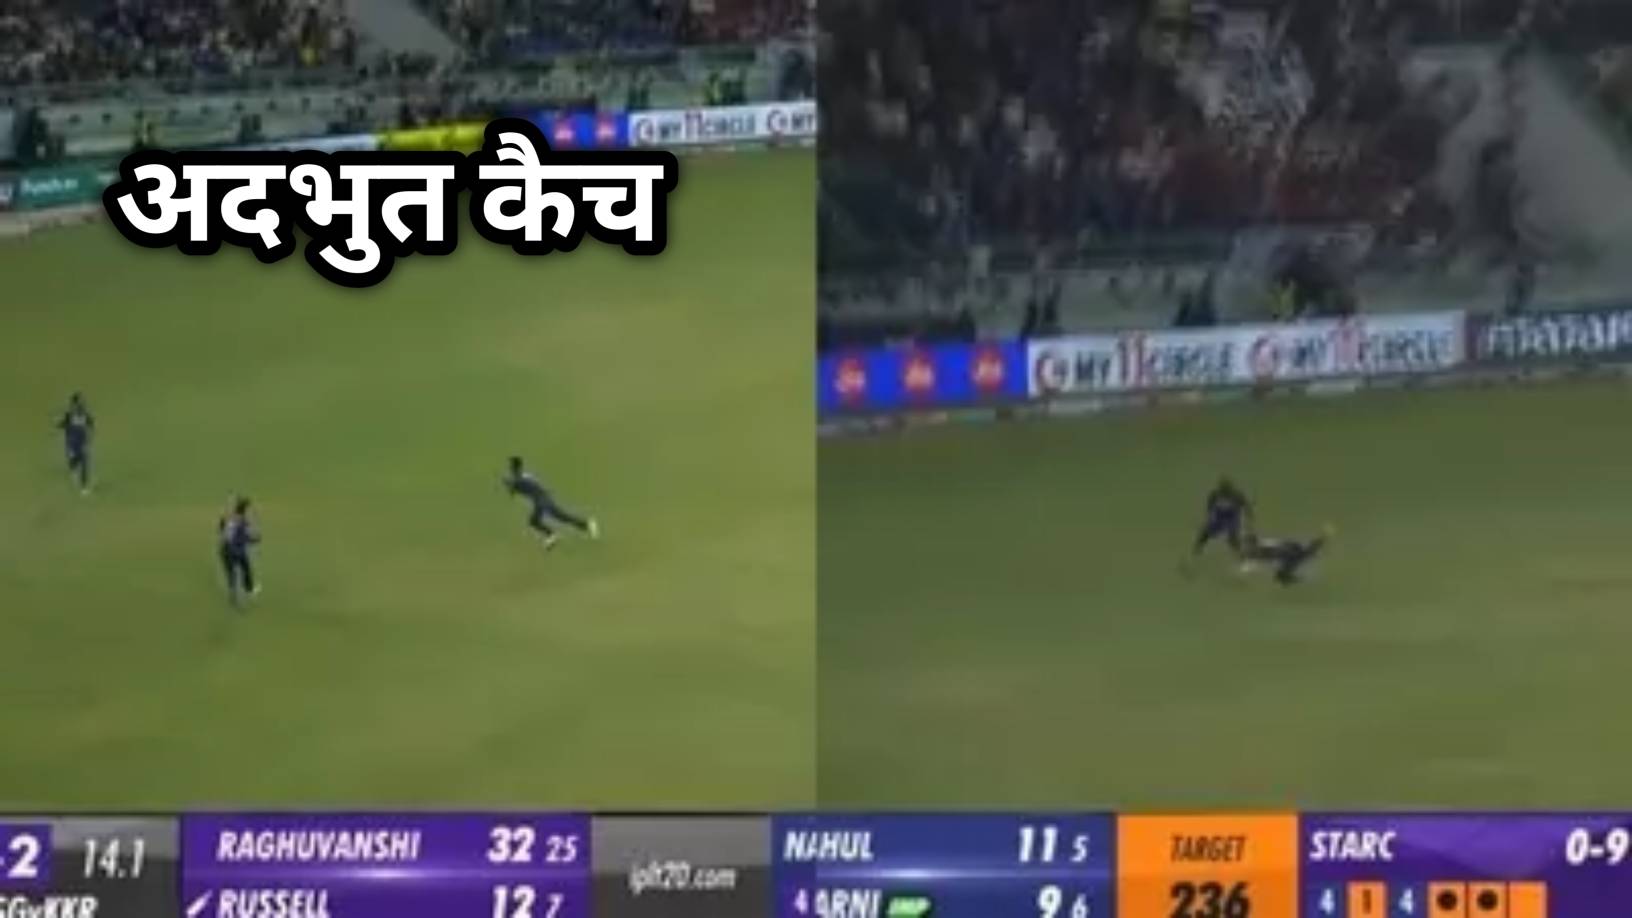 LSG vs KKR Krishnappa Gautam and Ramandeep Singh took brilliant catches while running in reverse